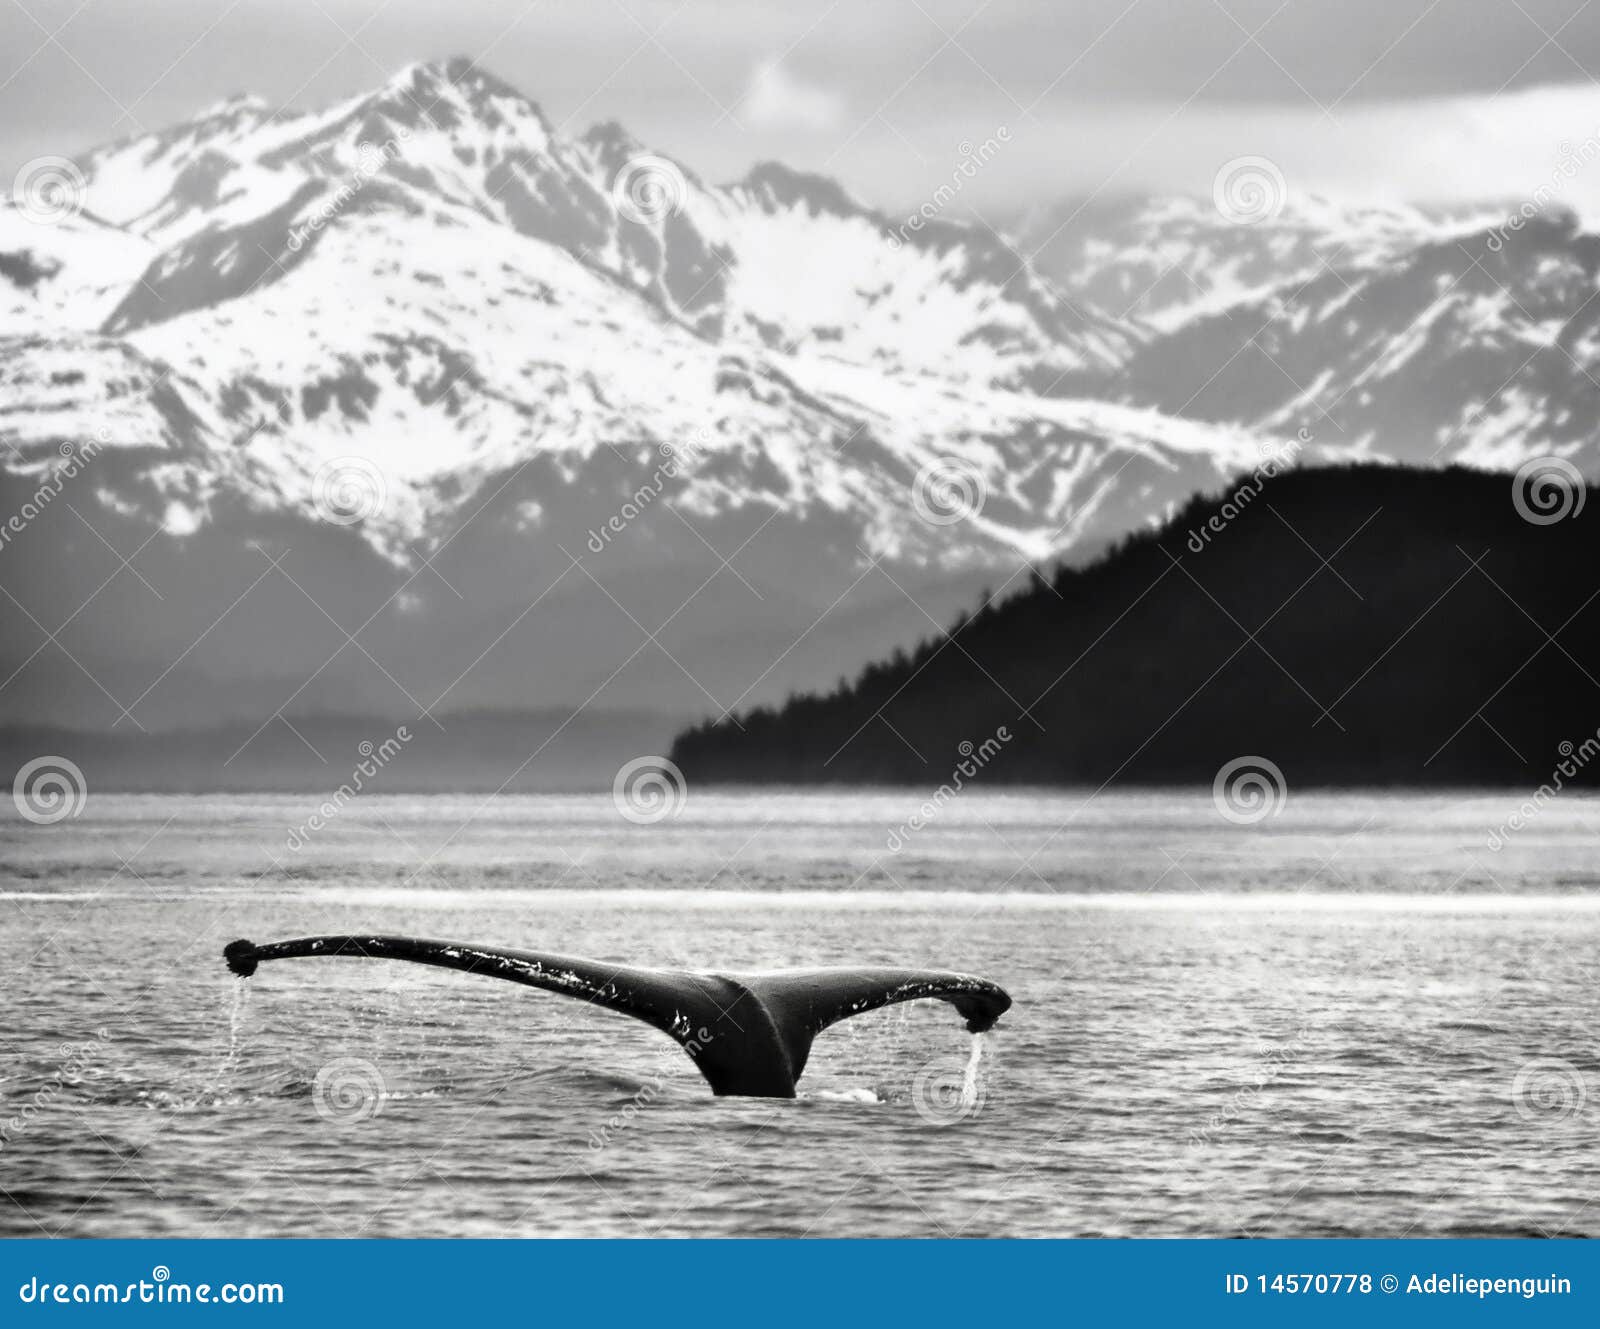 humpback whale tail, alaska